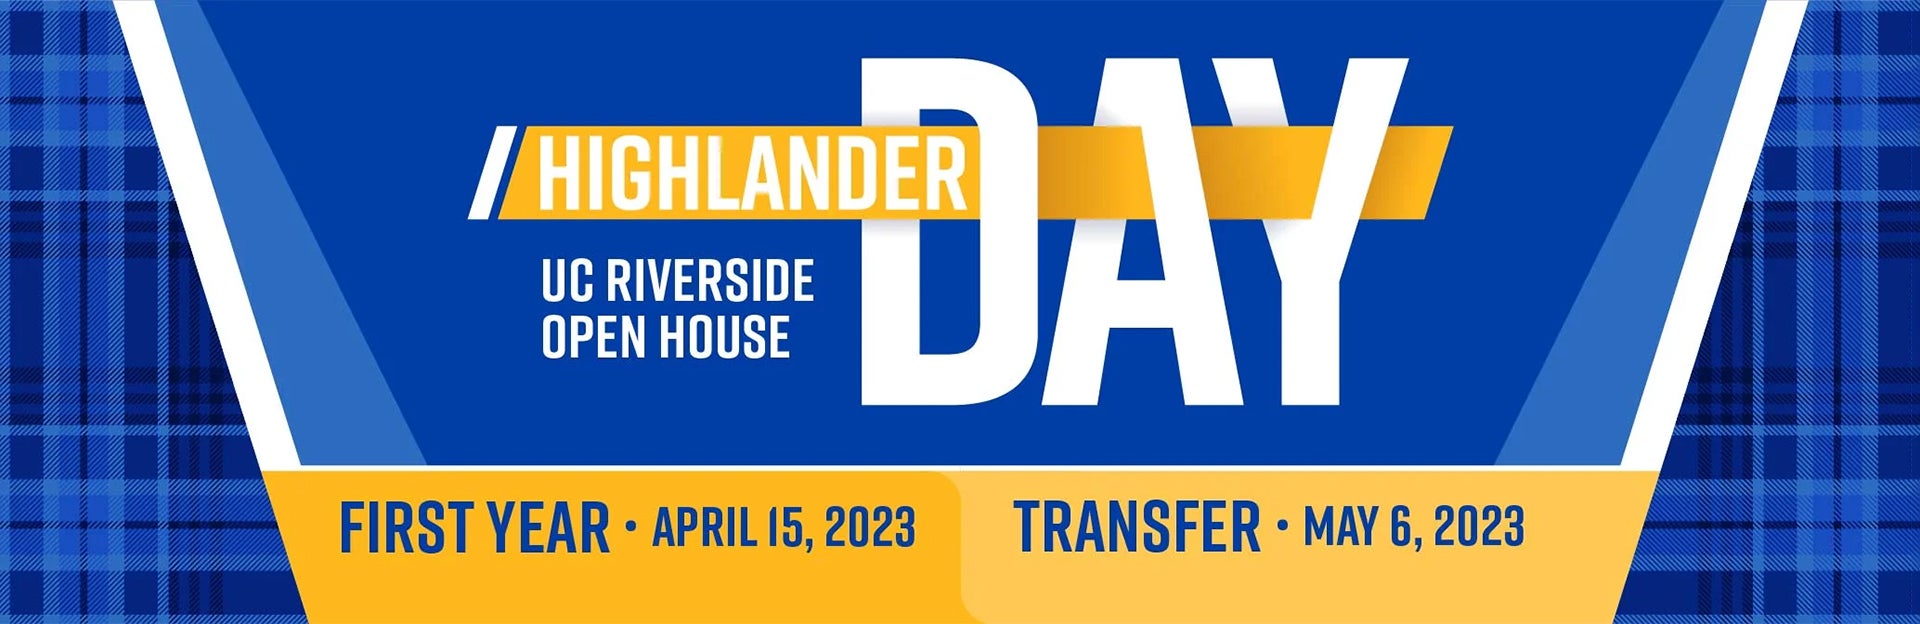 UC Riverside Highlander Day 2023